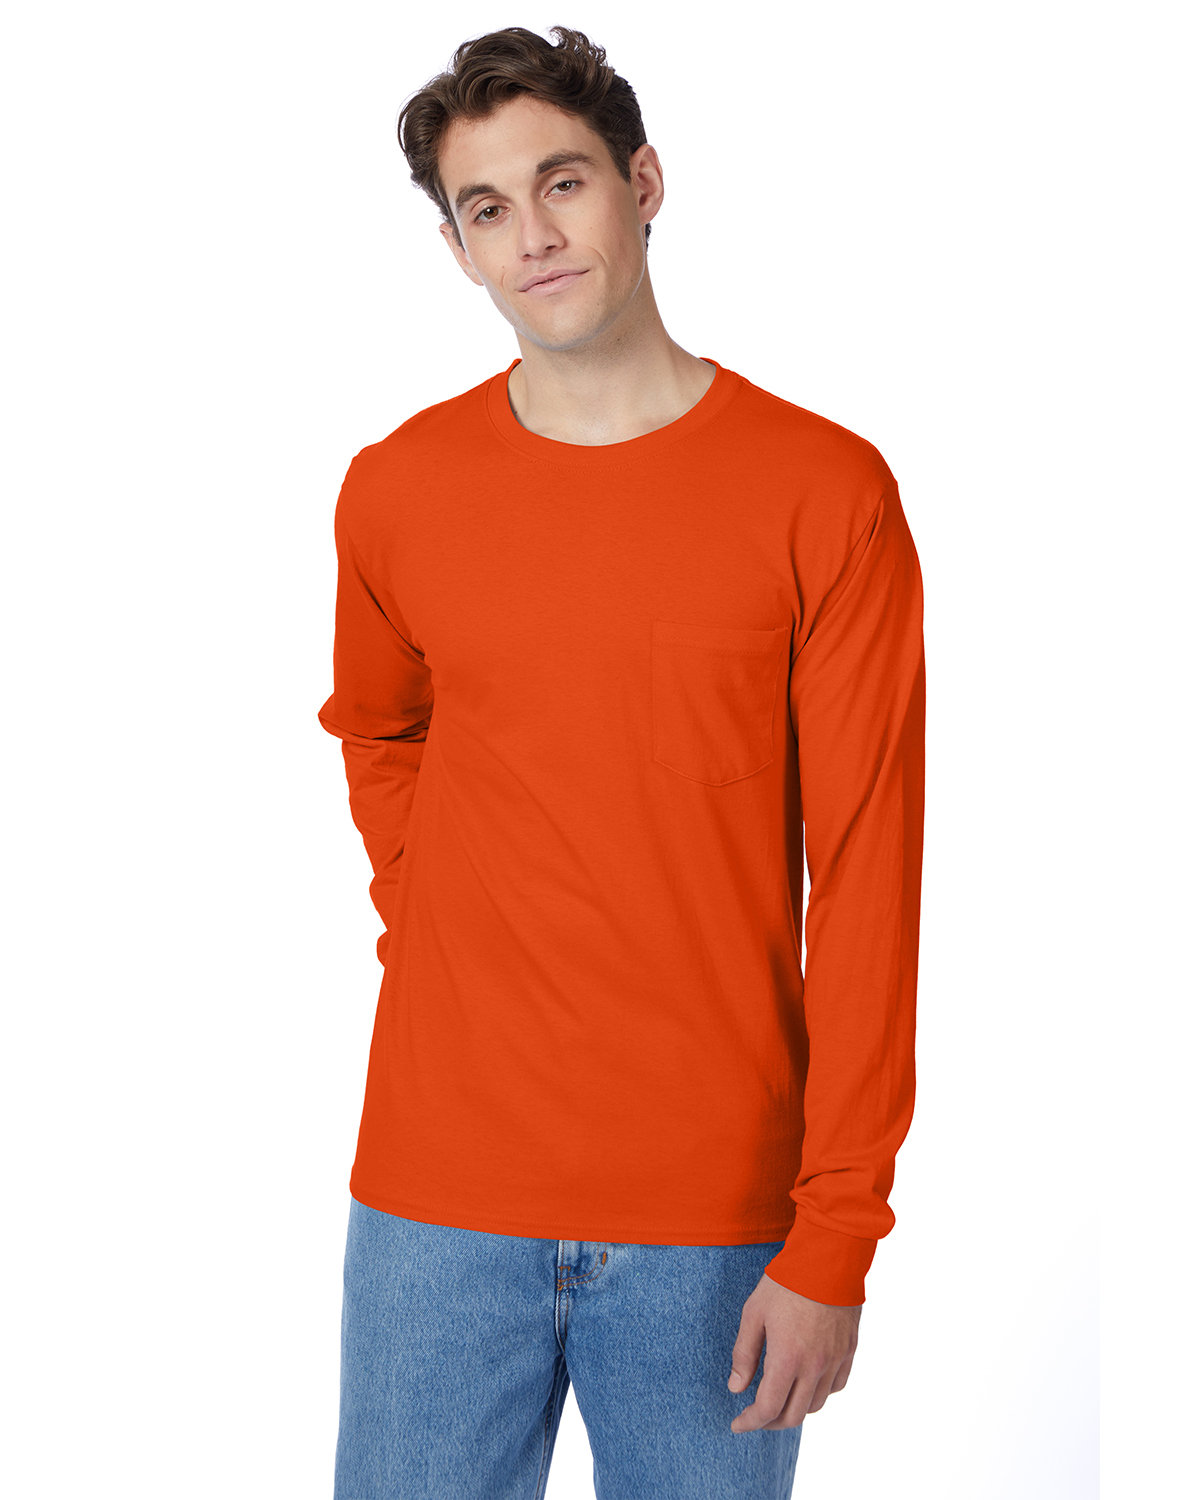 Hanes Men's Authentic-T Long-Sleeve Pocket T-Shirt ORANGE 